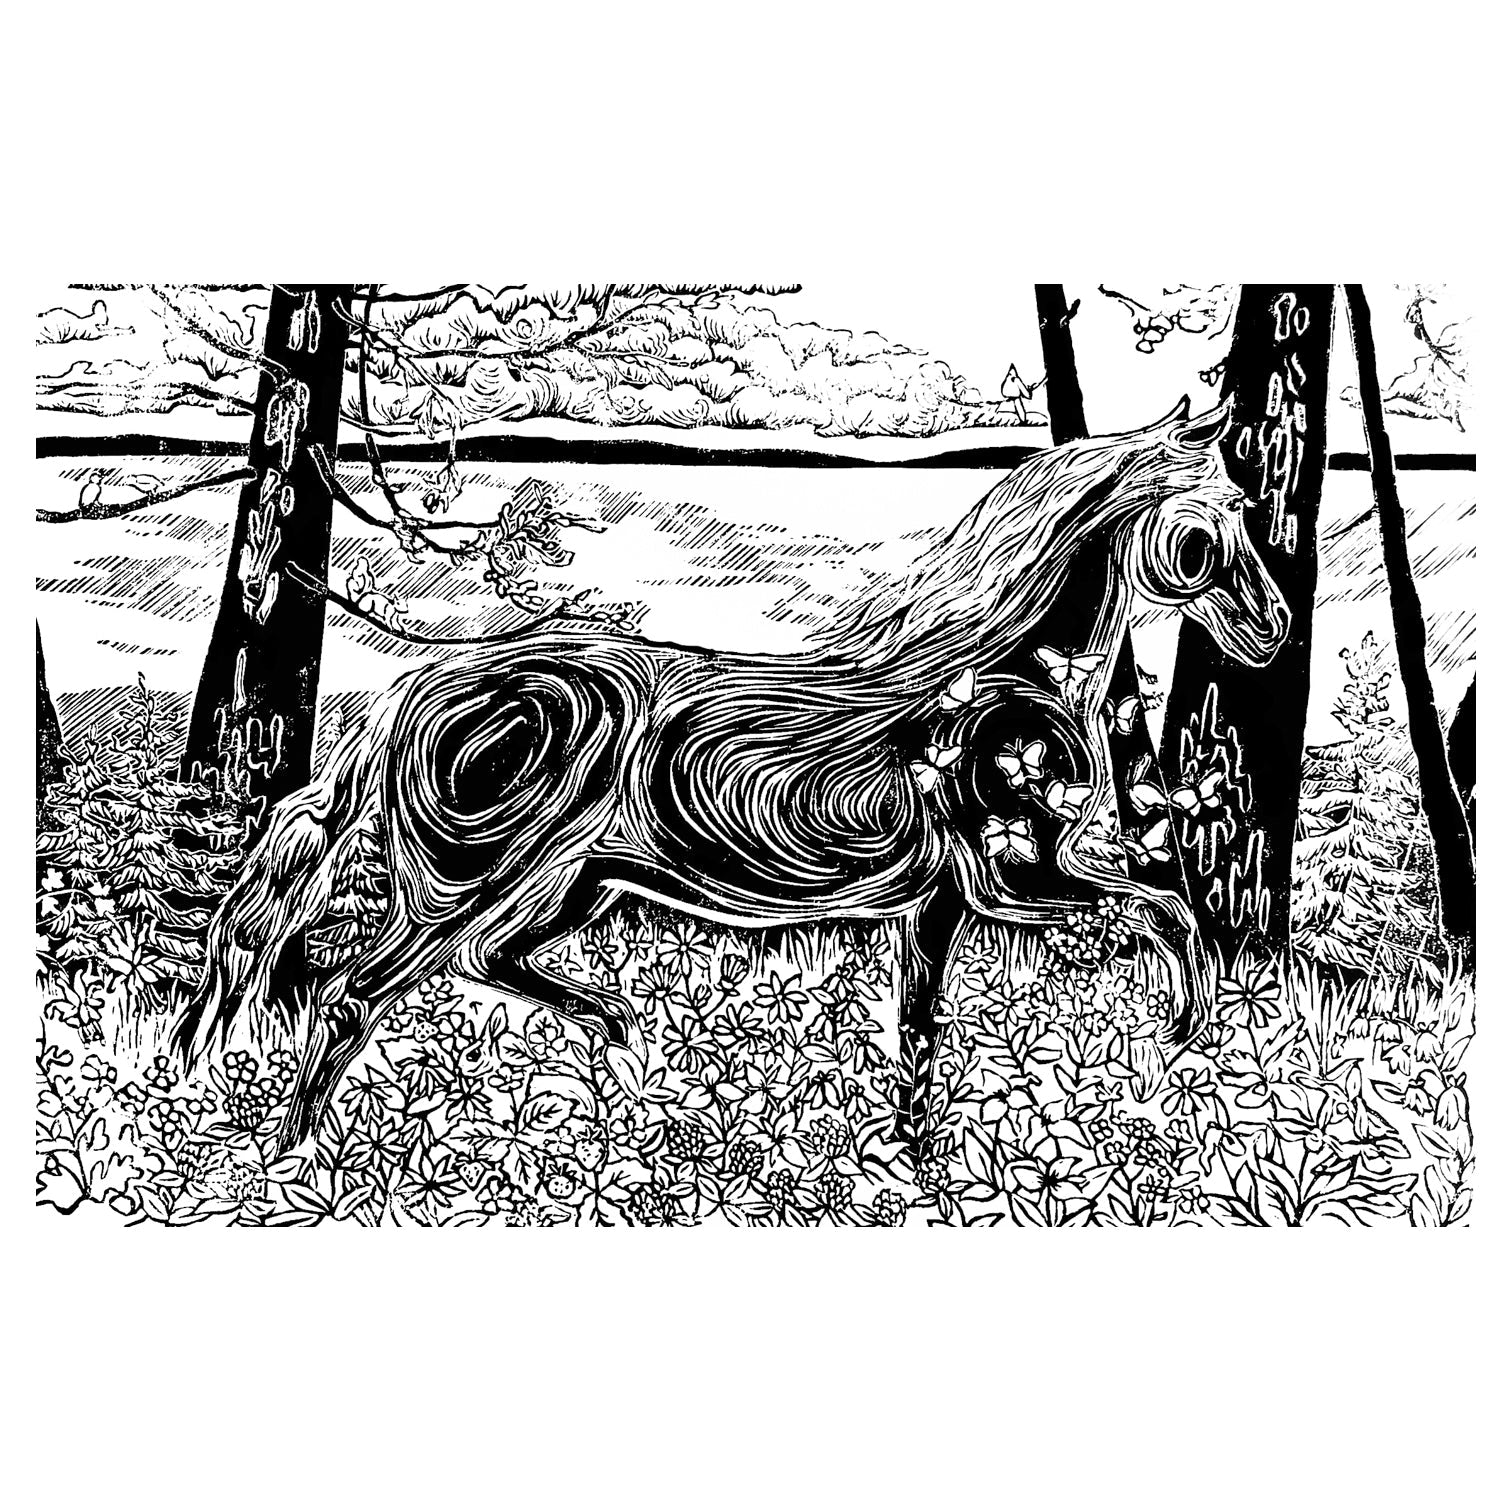 Horse art by Natalia Wohletz of Peninsula Prints, Milford & Mackinac Island, Michigan, titled Morning Frolic #1.